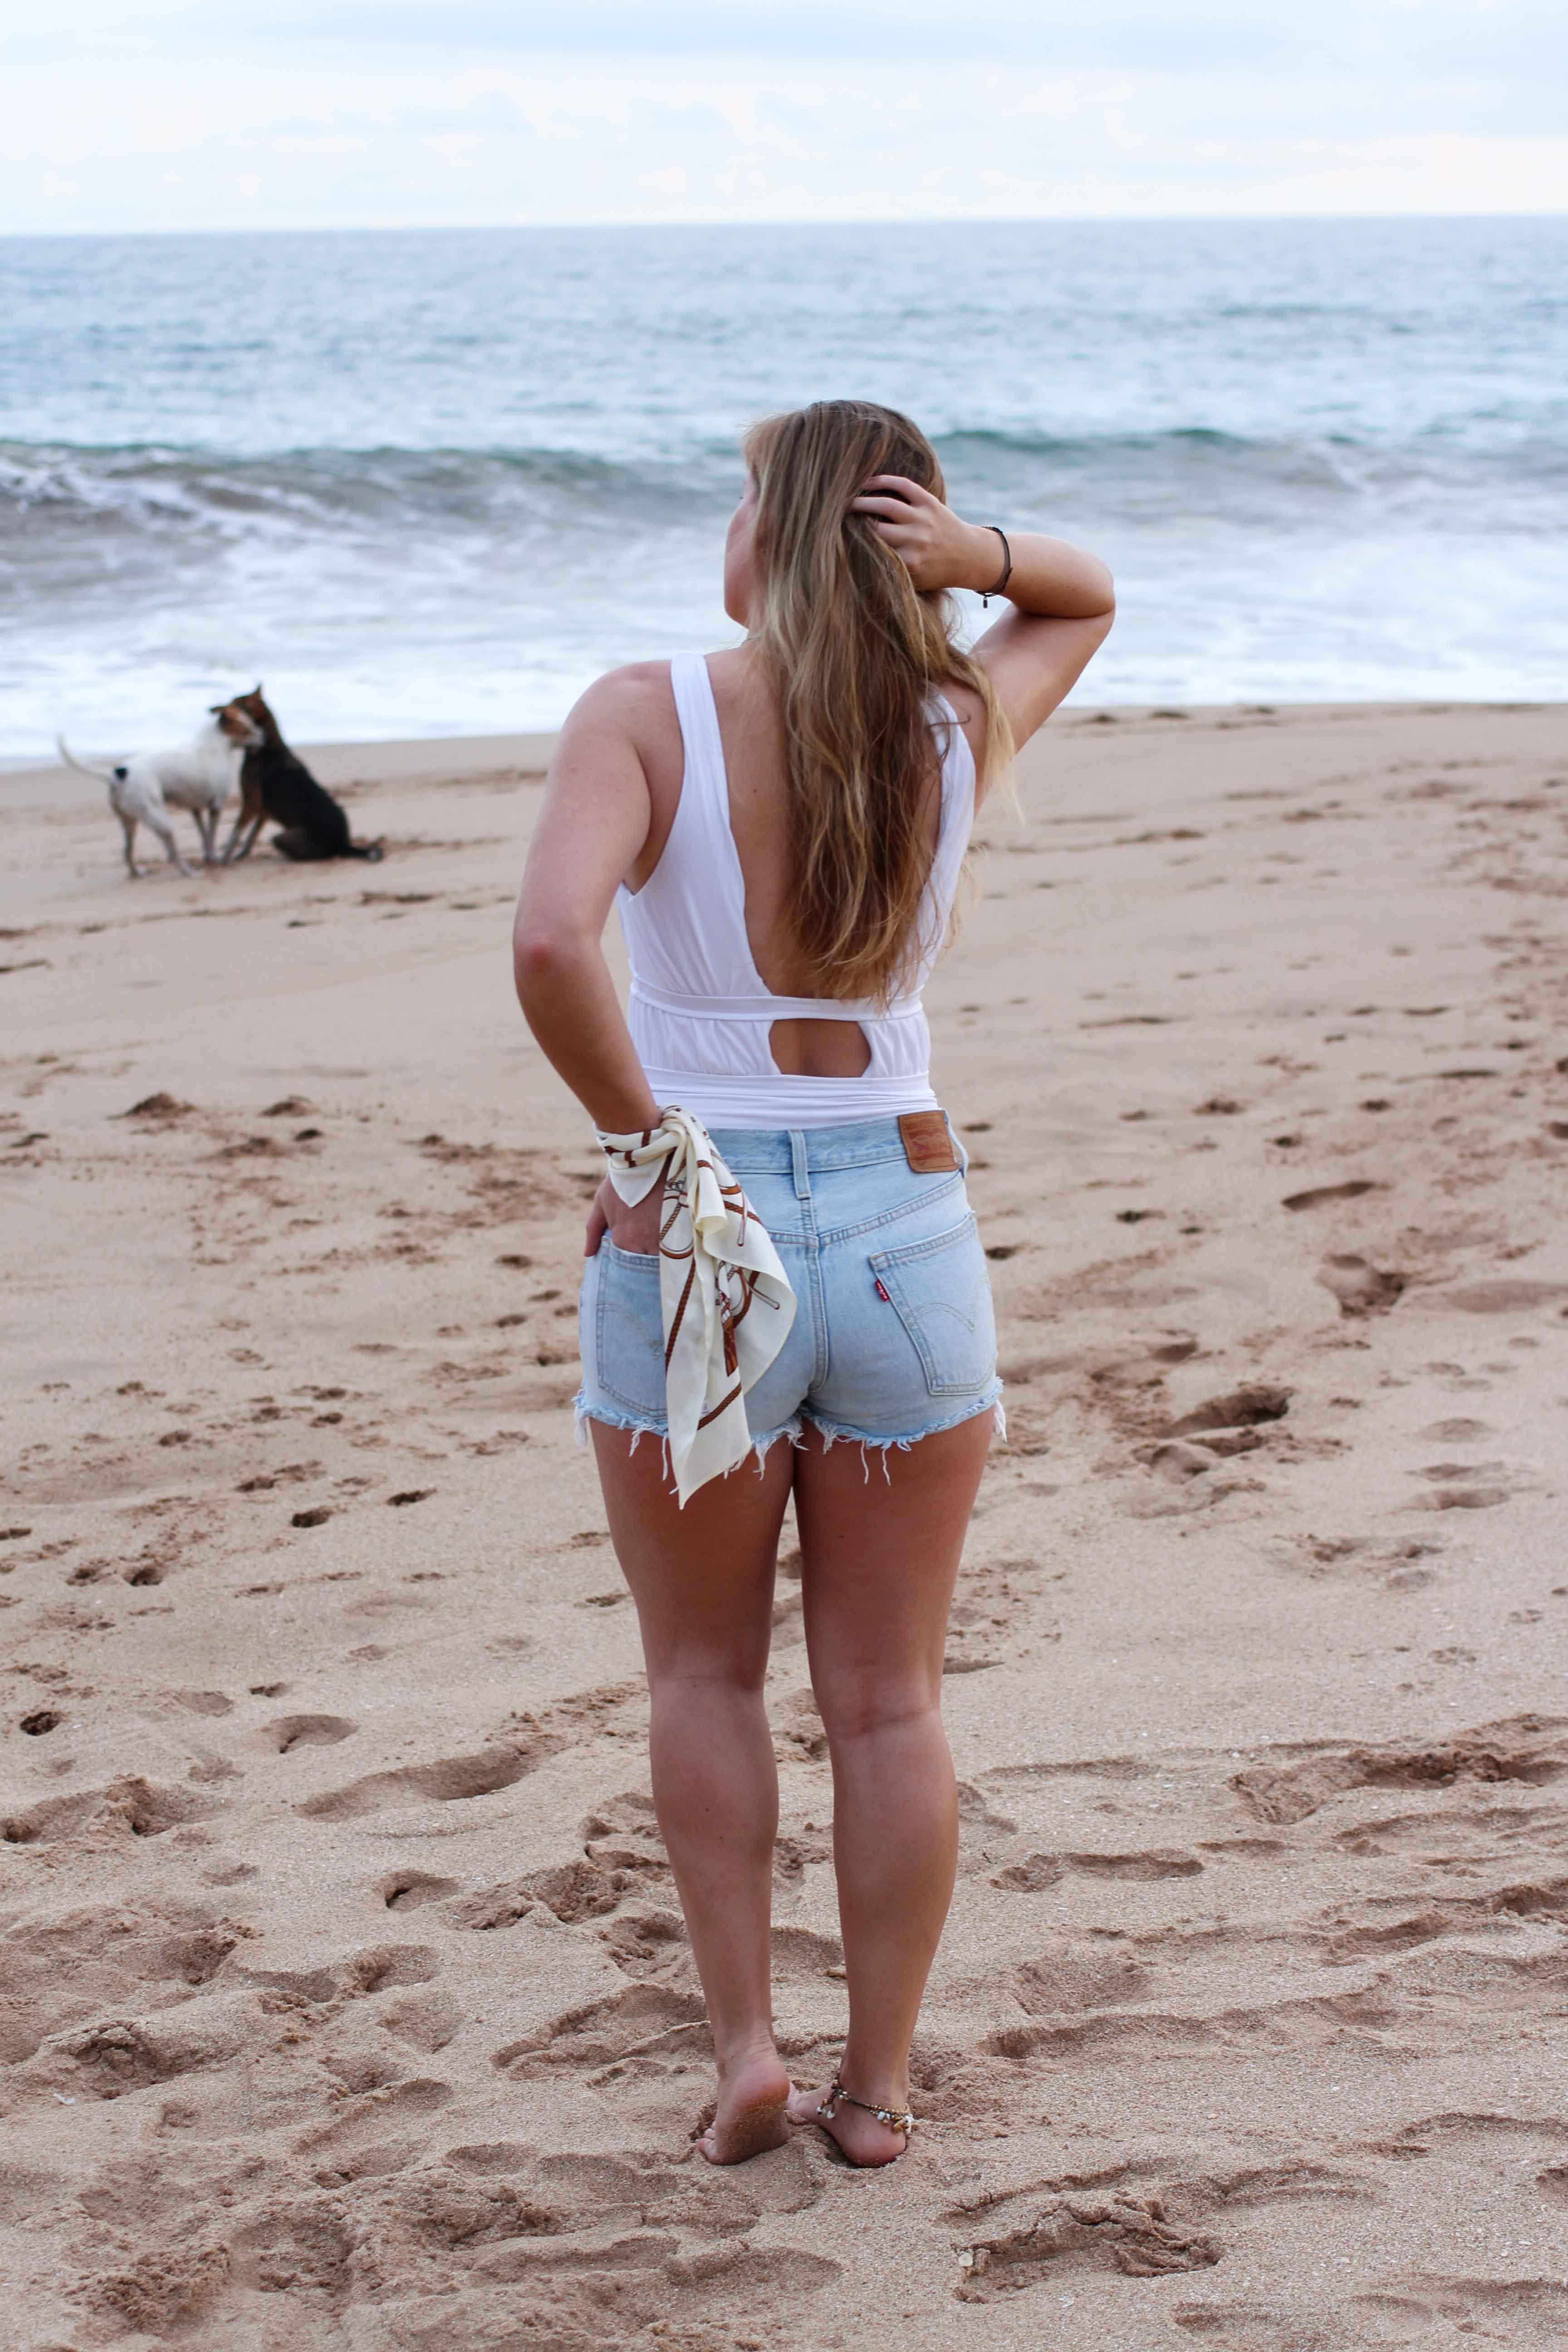 Badeanzug weiß kombinieren Jeans Hotpants Levis 501 Shorts Beachlook Sri Lanka Tangalle Sommer Outfit Modeblog 6